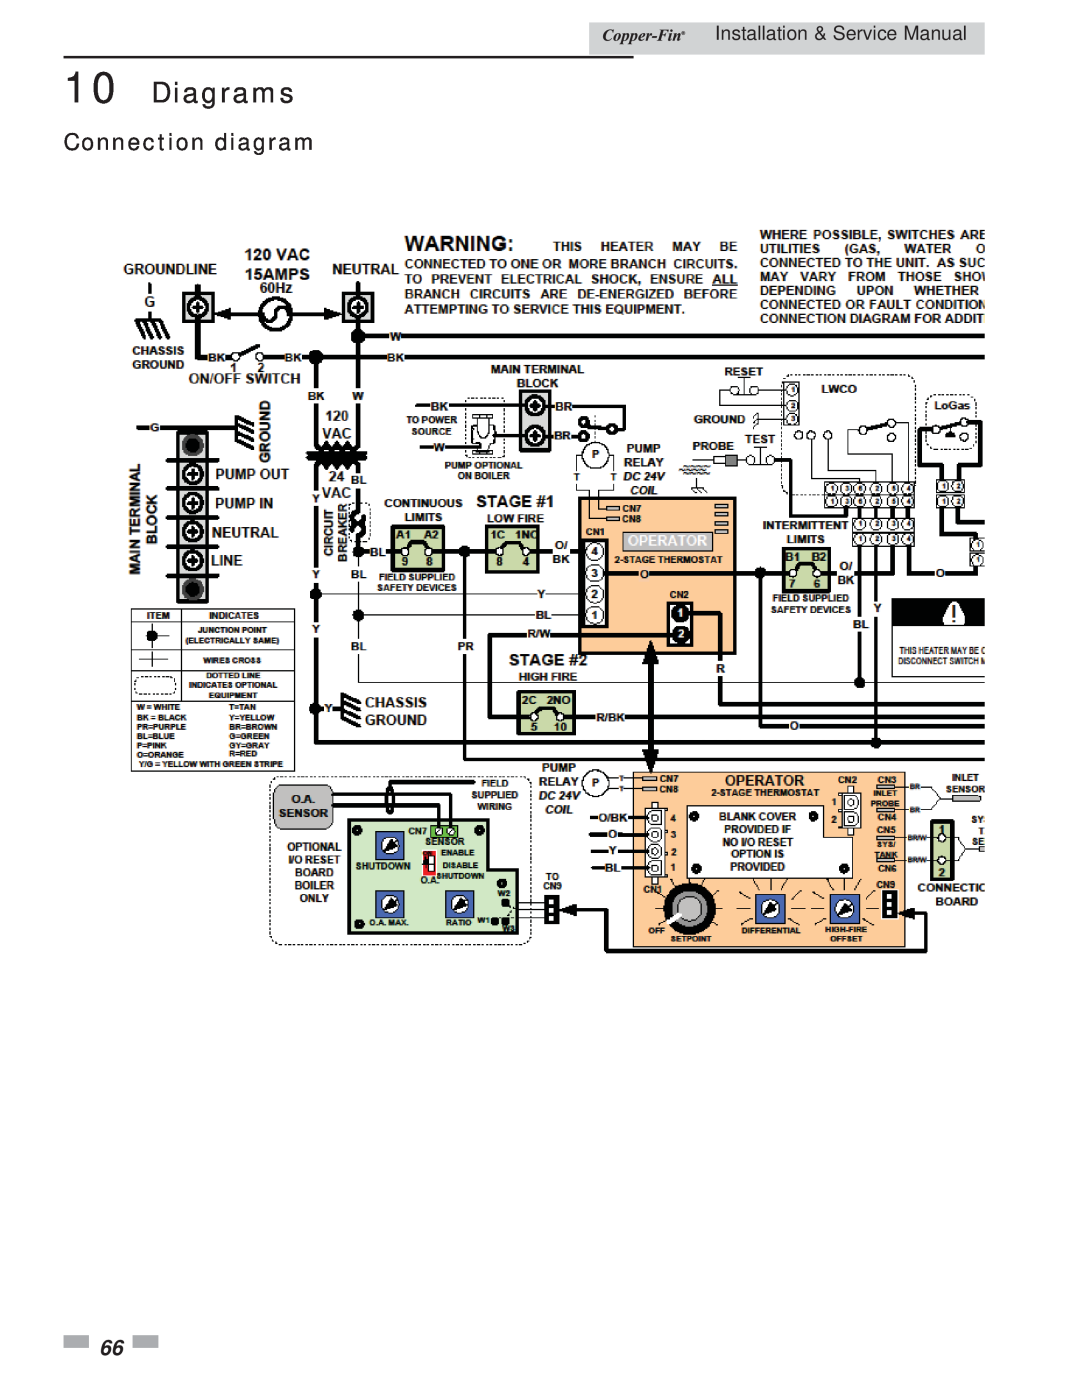 Lochinvar 497 - 2067 service manual Connection diagram, Diagrams, Installation & Service Manual 